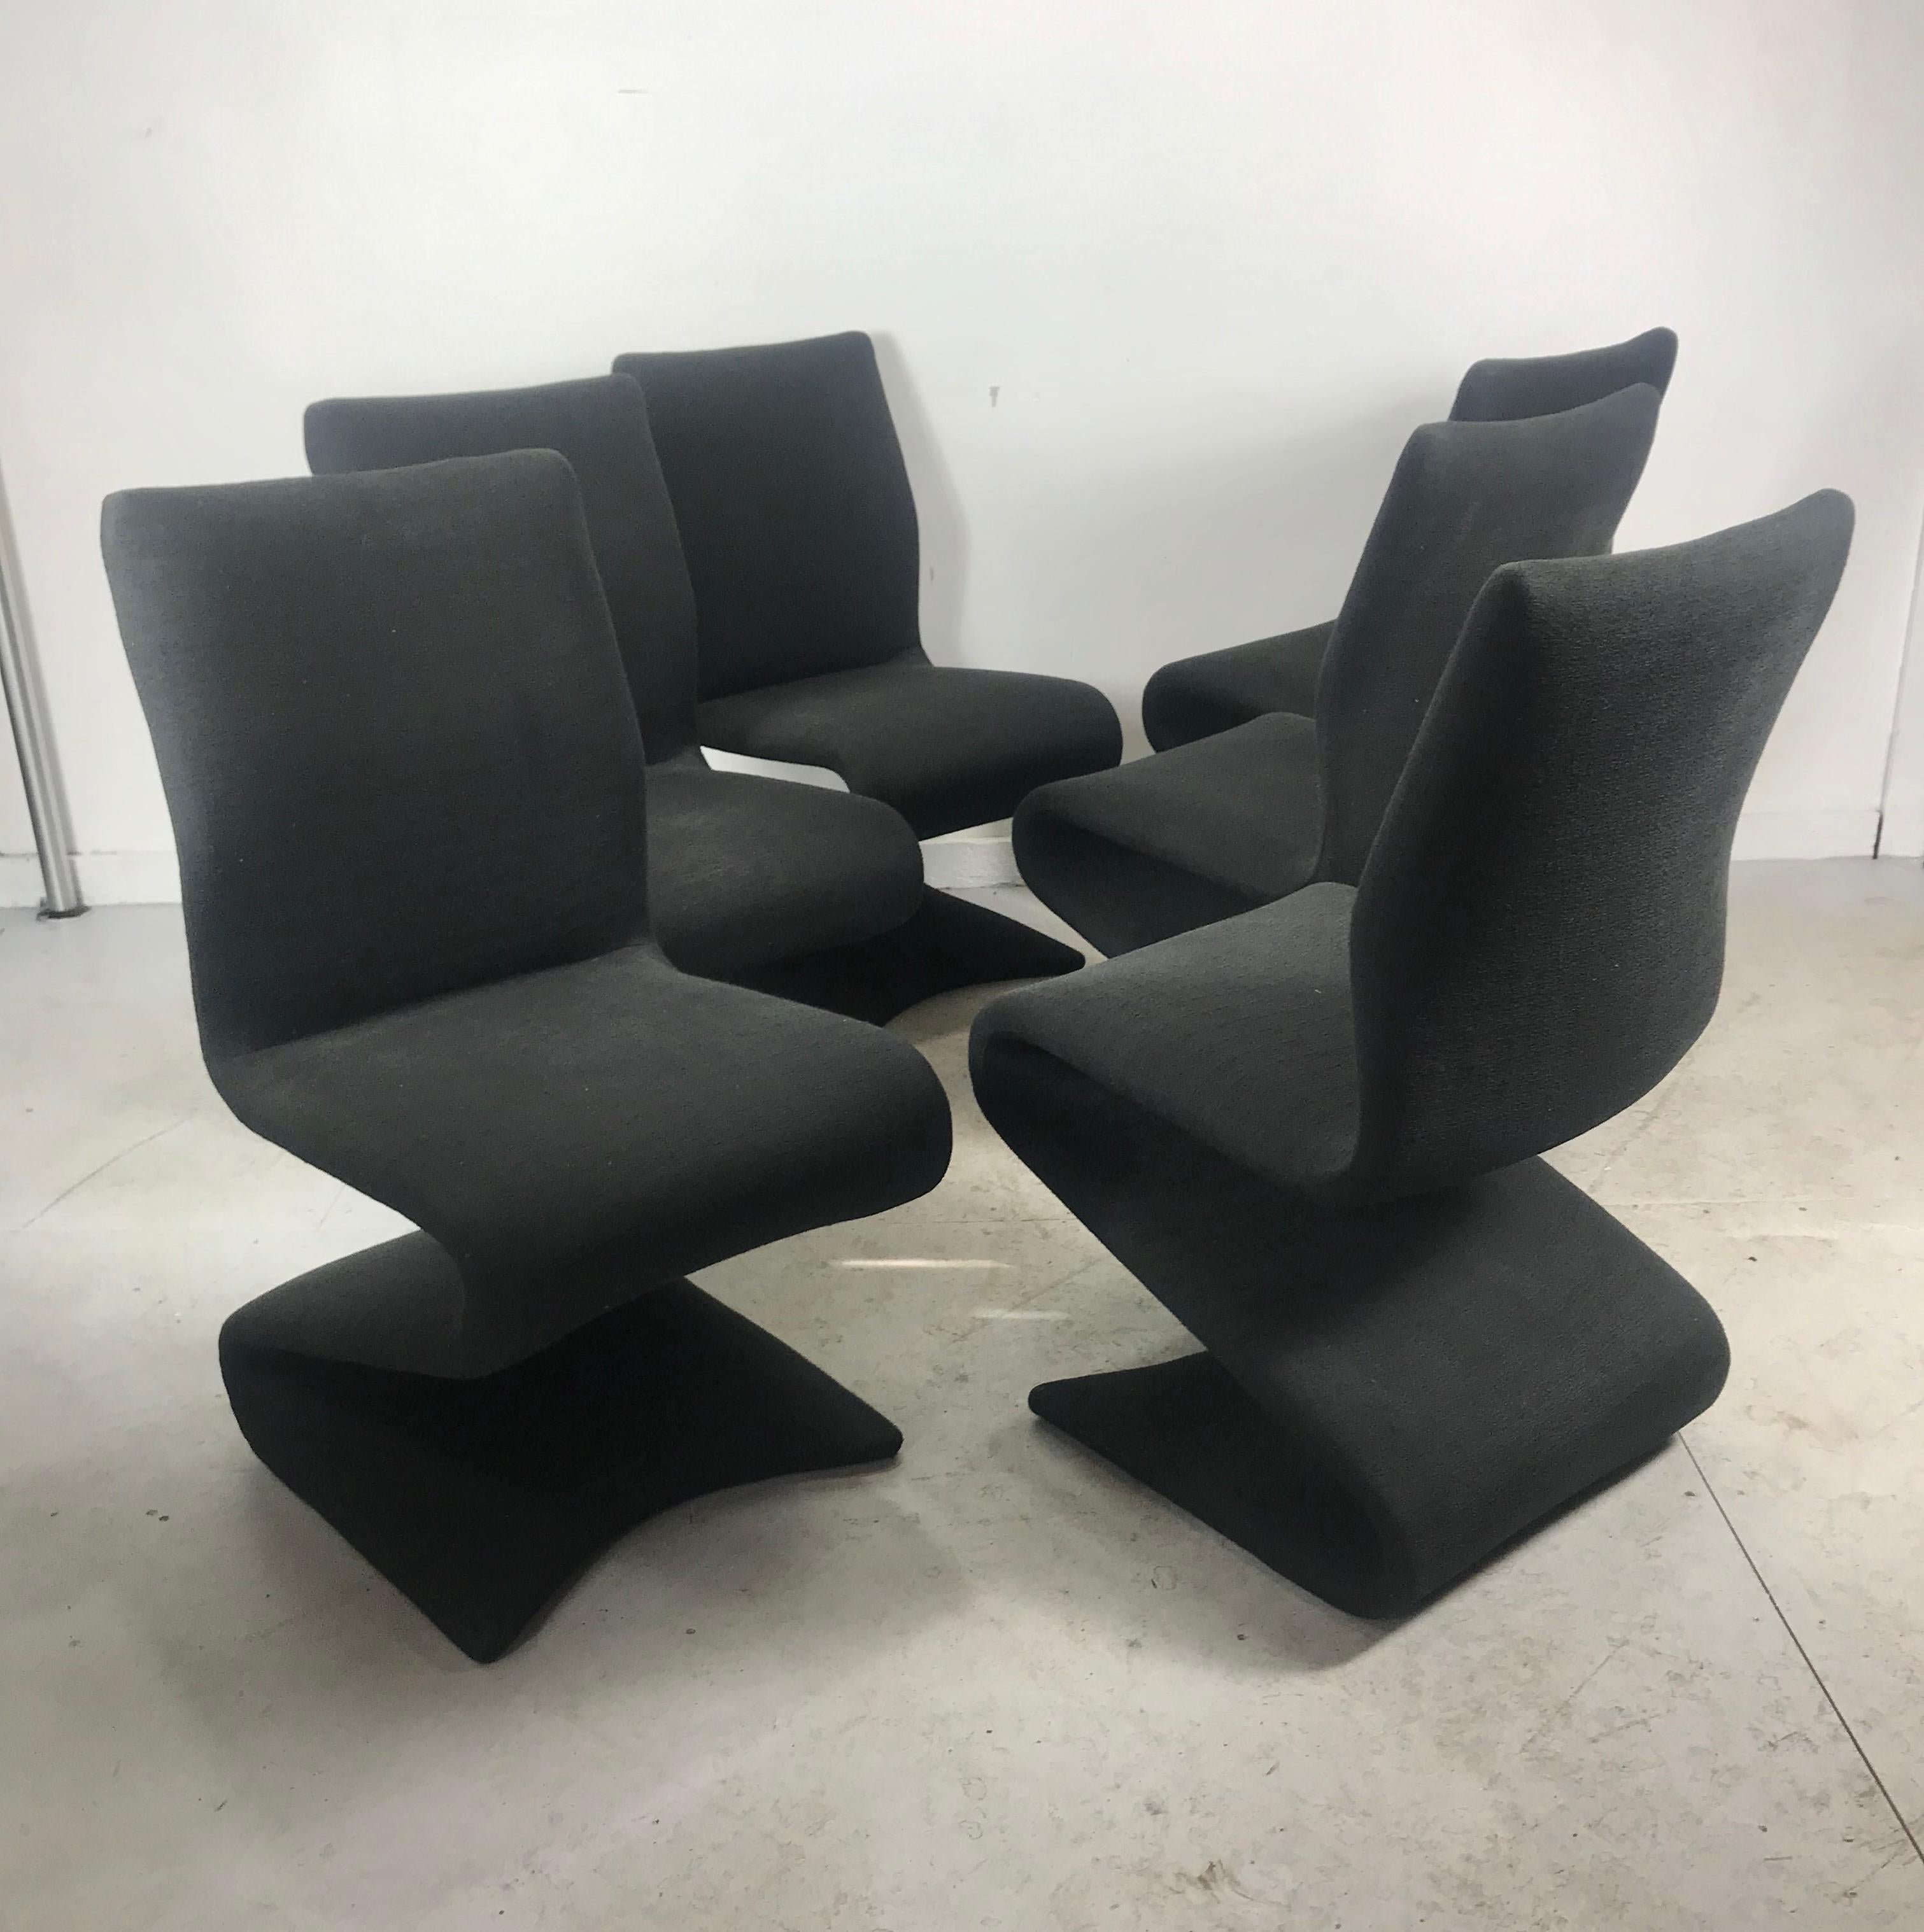 s shape chairs